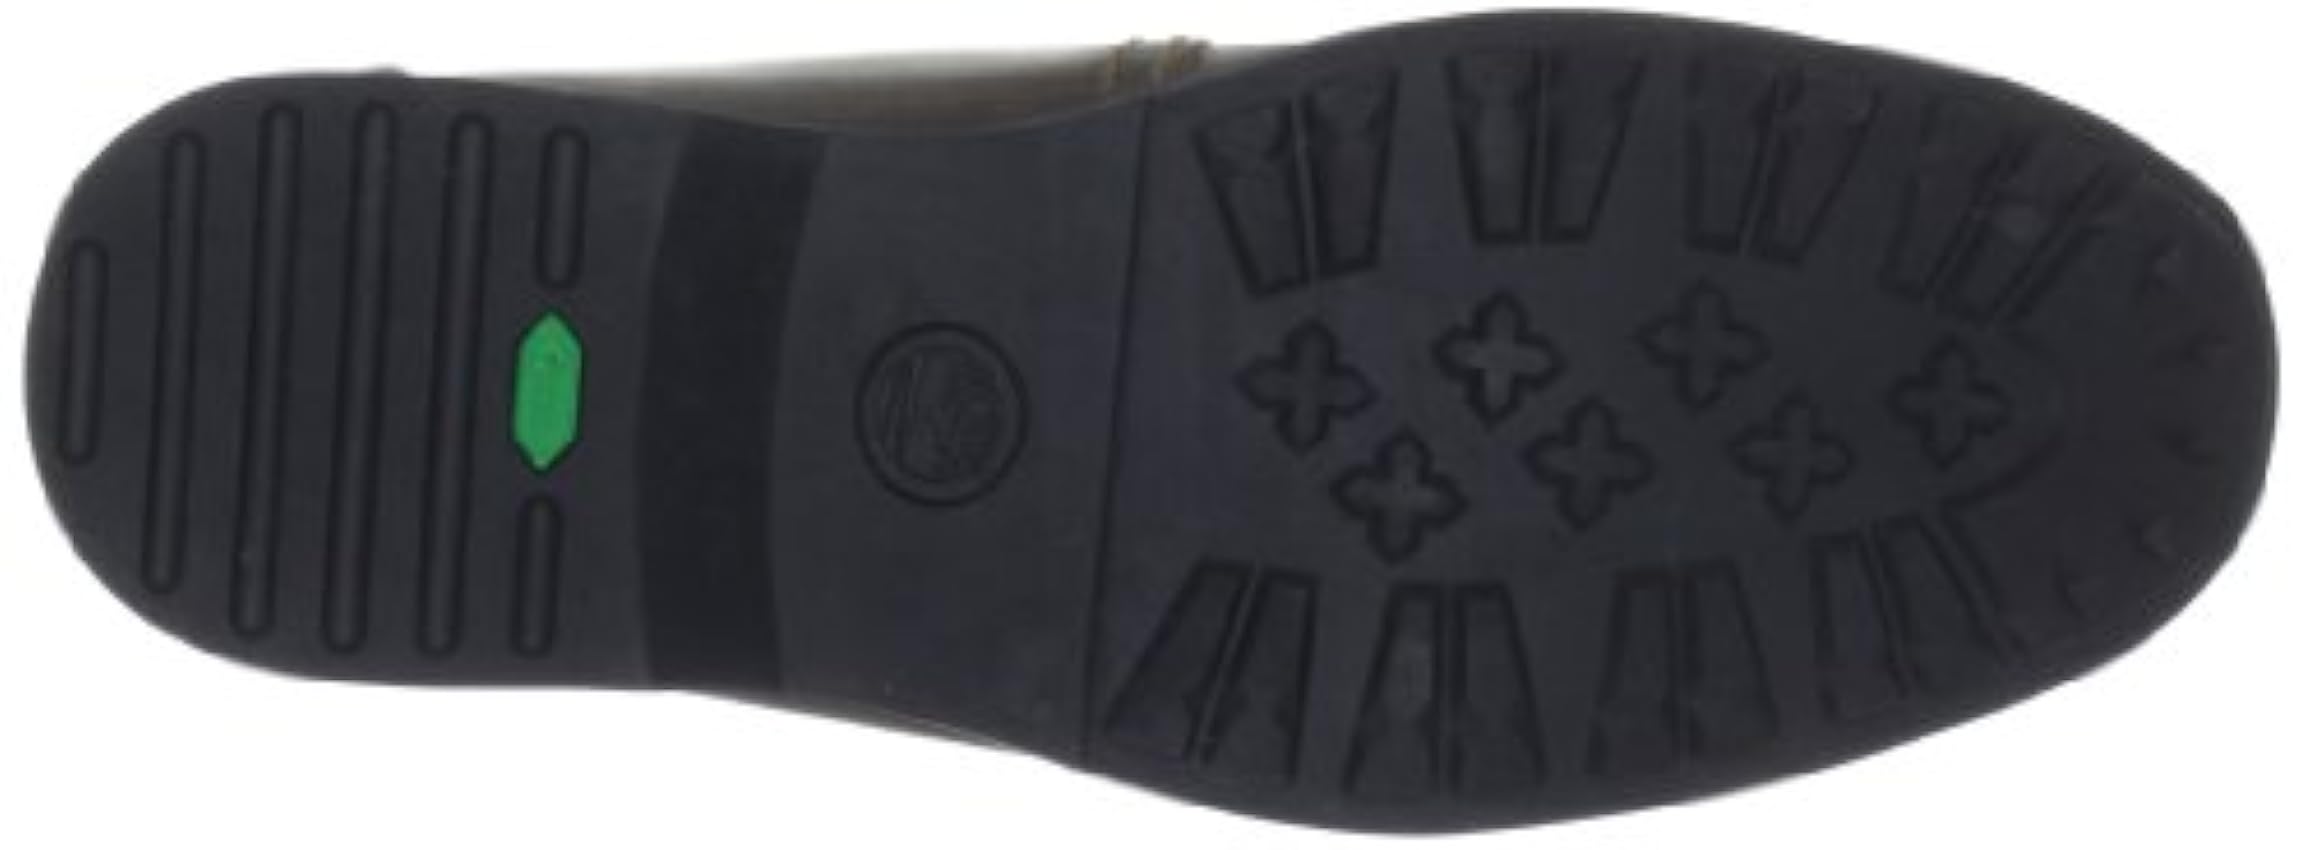 Timberland EKCITYLITE CHKA Brn 3149R - Zapatos Casual de Cuero para Hombre ecsSKylX